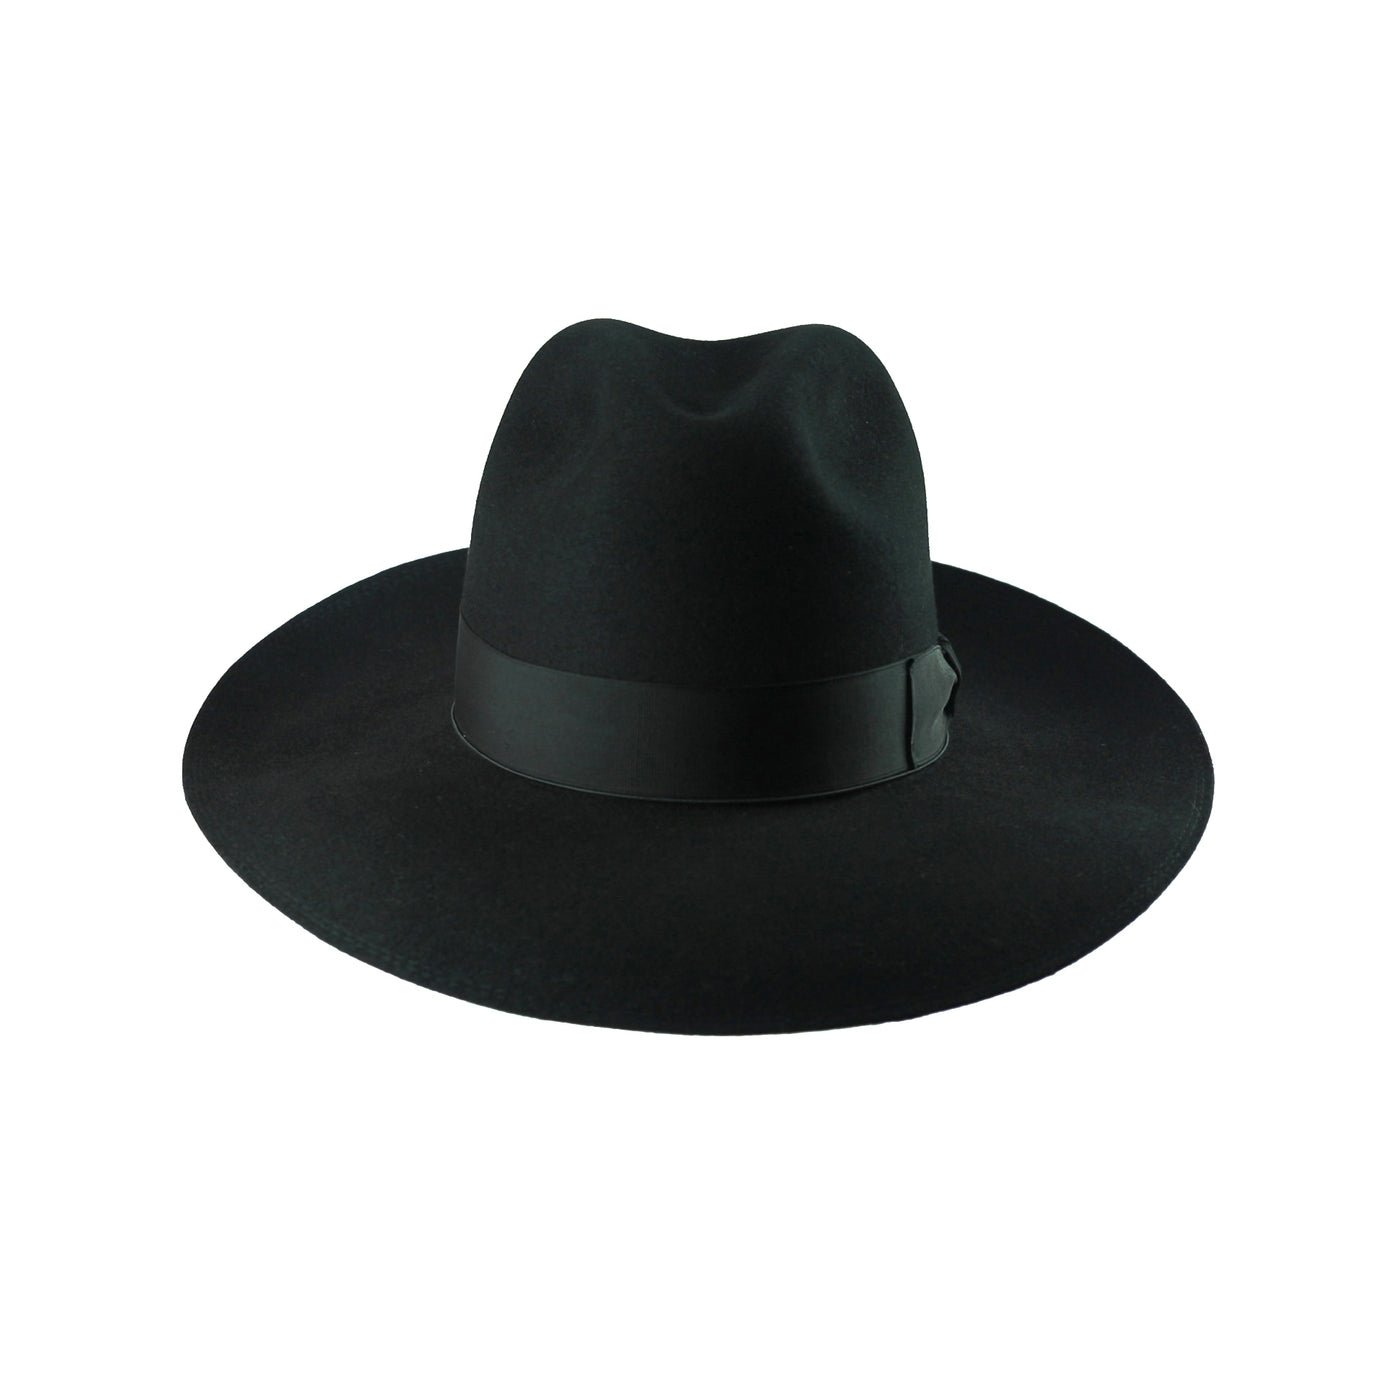 Valenza 358, product_type] - Borsalino for Atica fedora hat